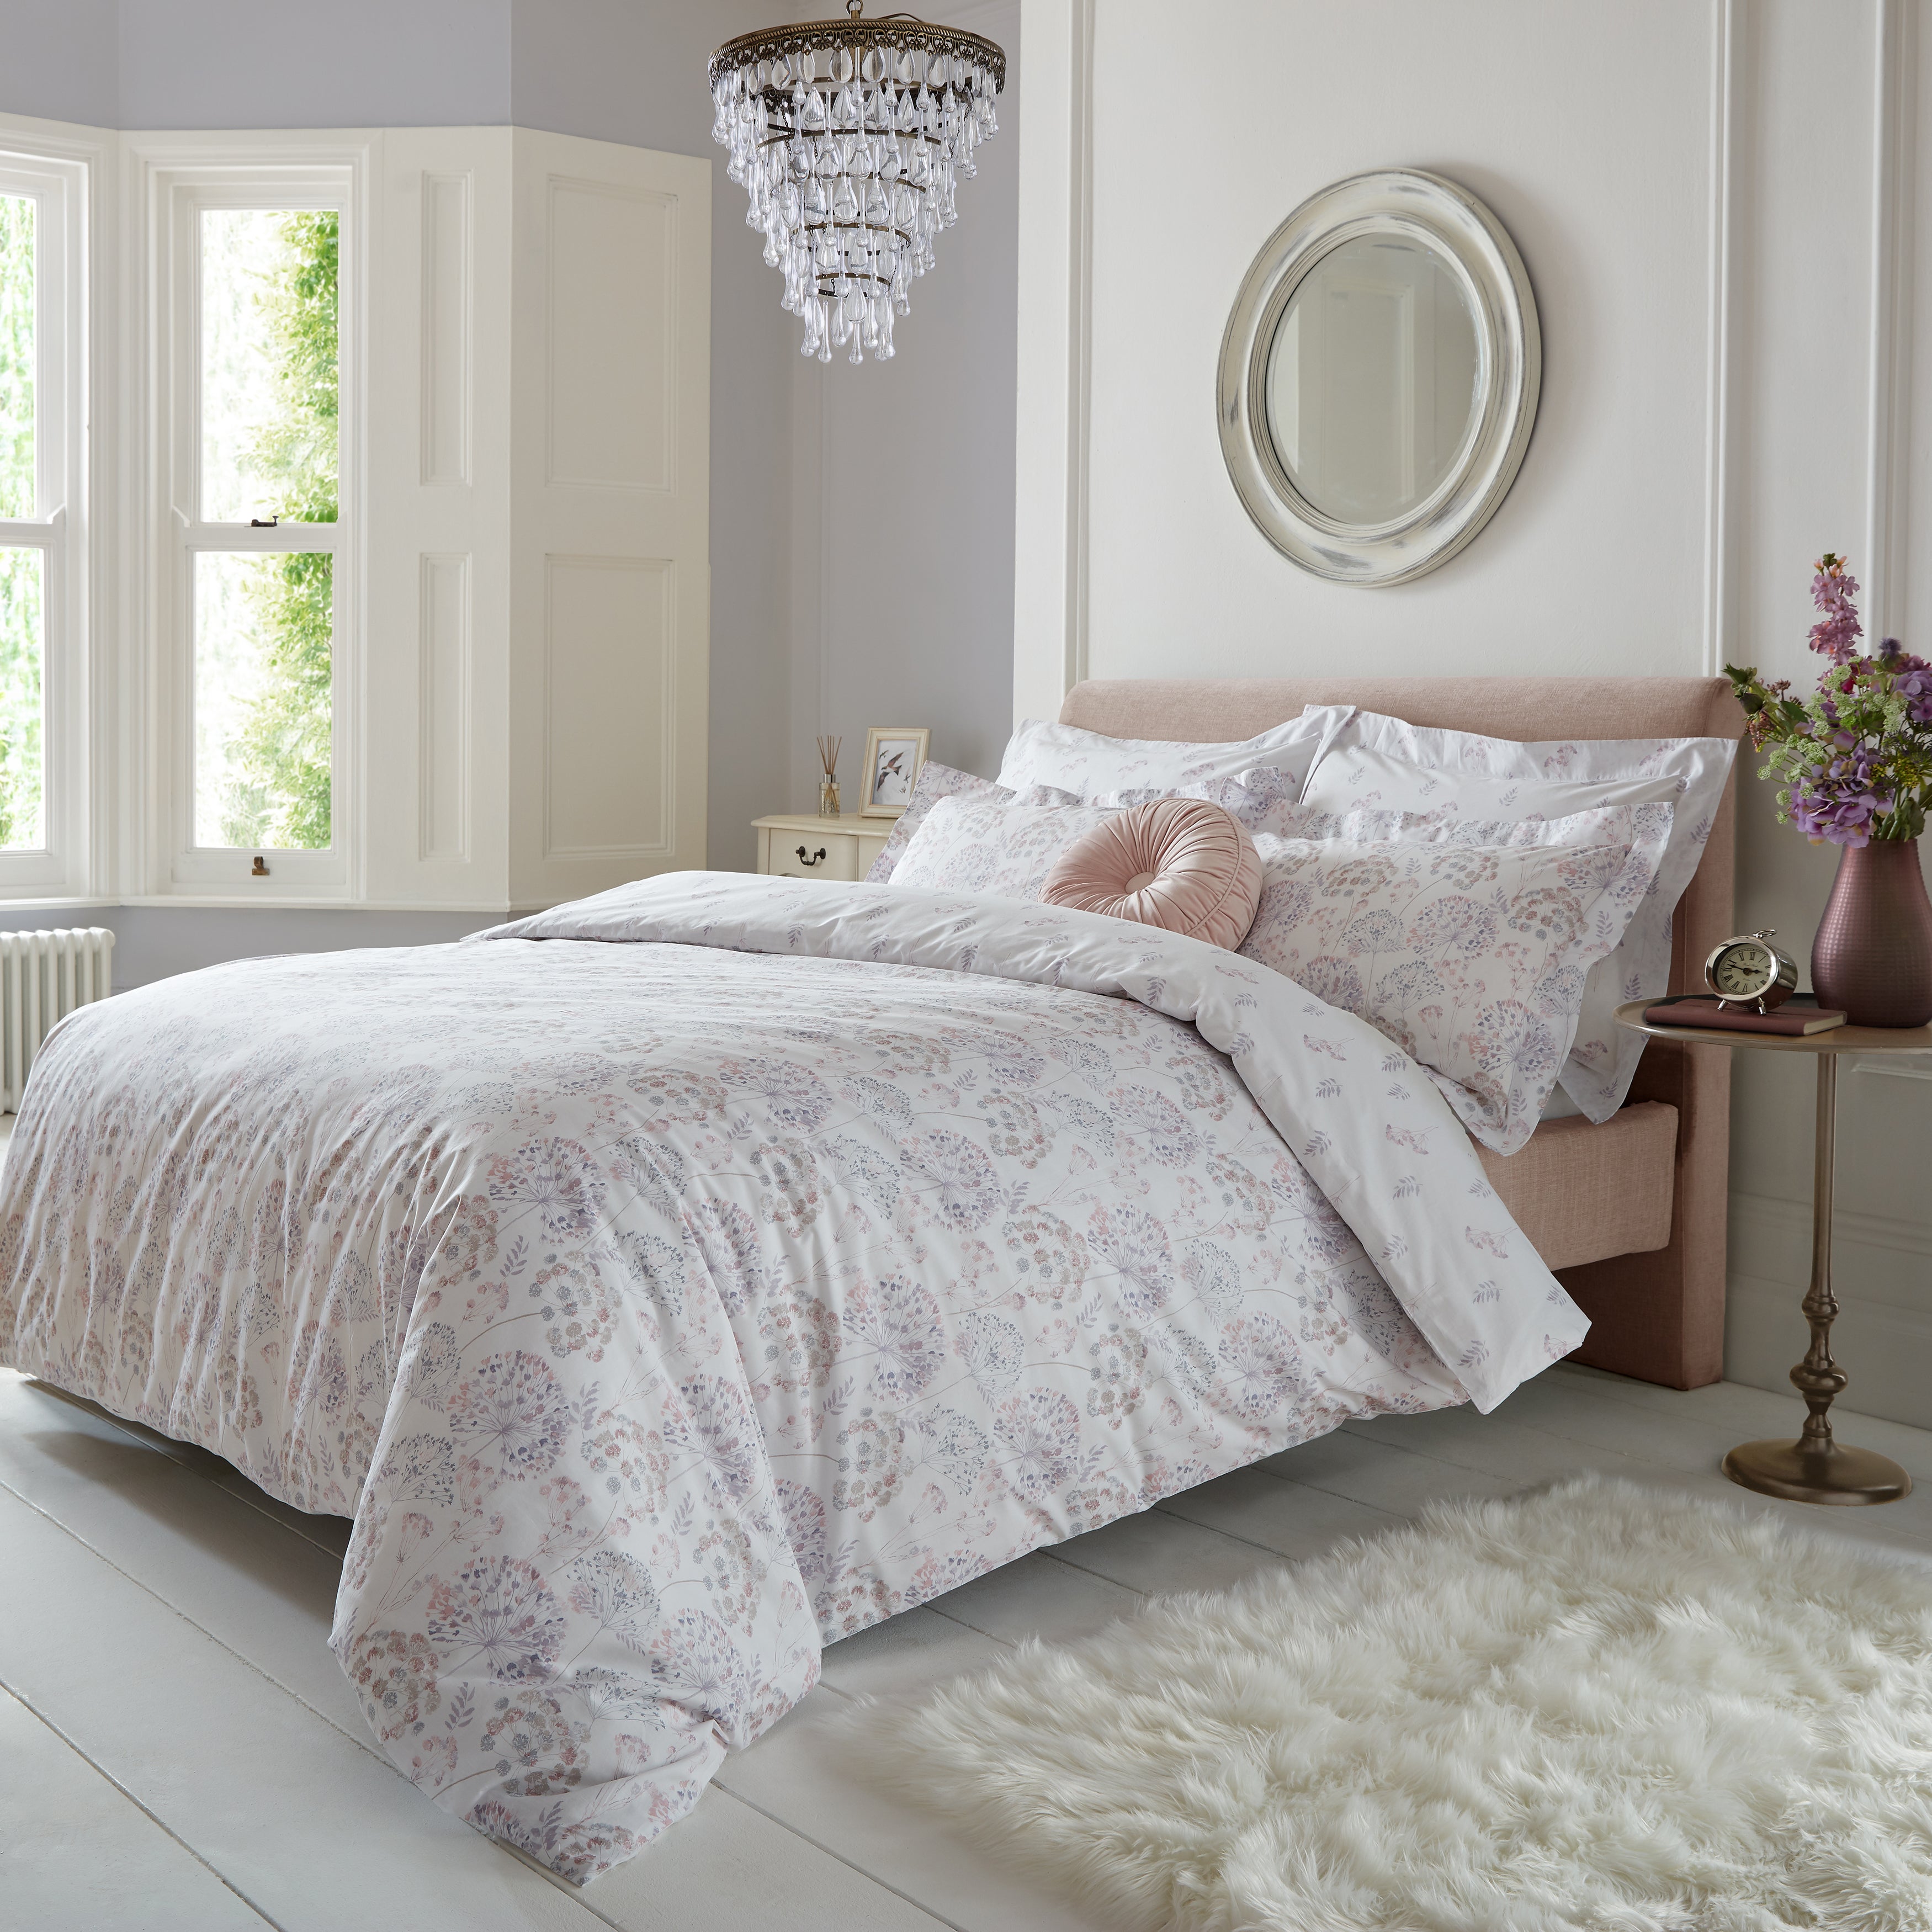 Azara Floral 100% Cotton Duvet Cover and Pillowcase Set Pink/Grey/White